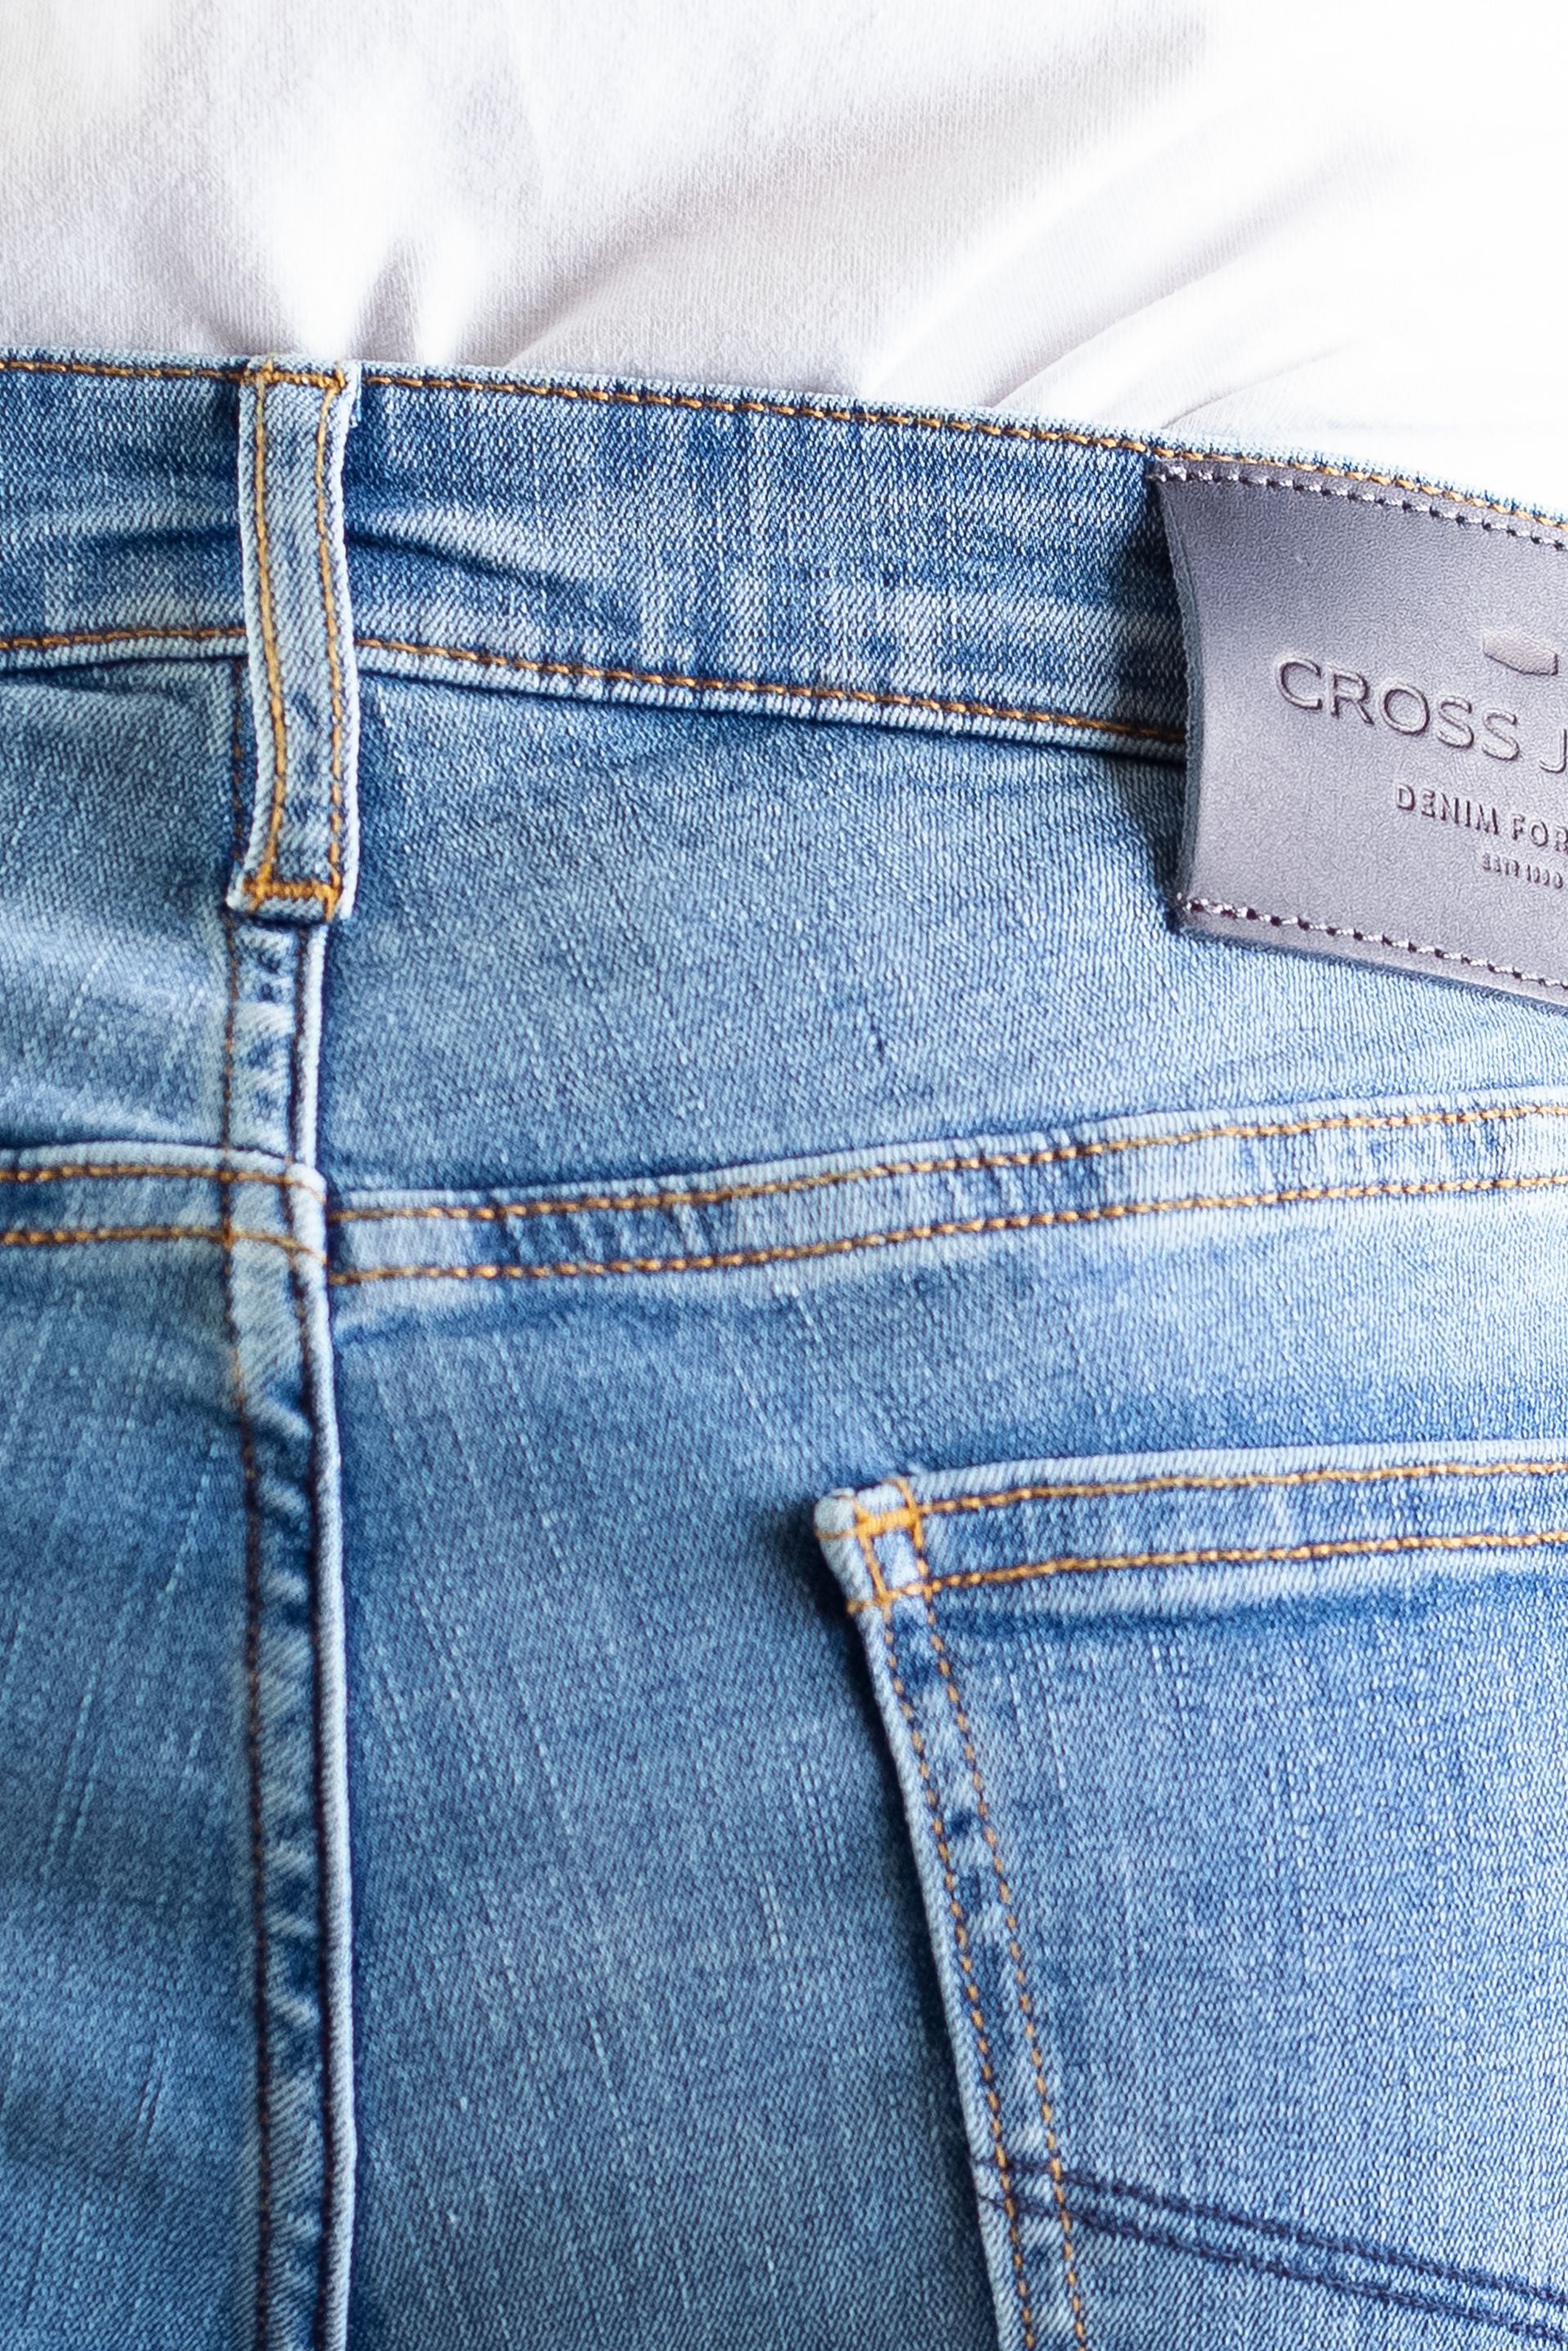 Jeans CROSS JEANS E198-041